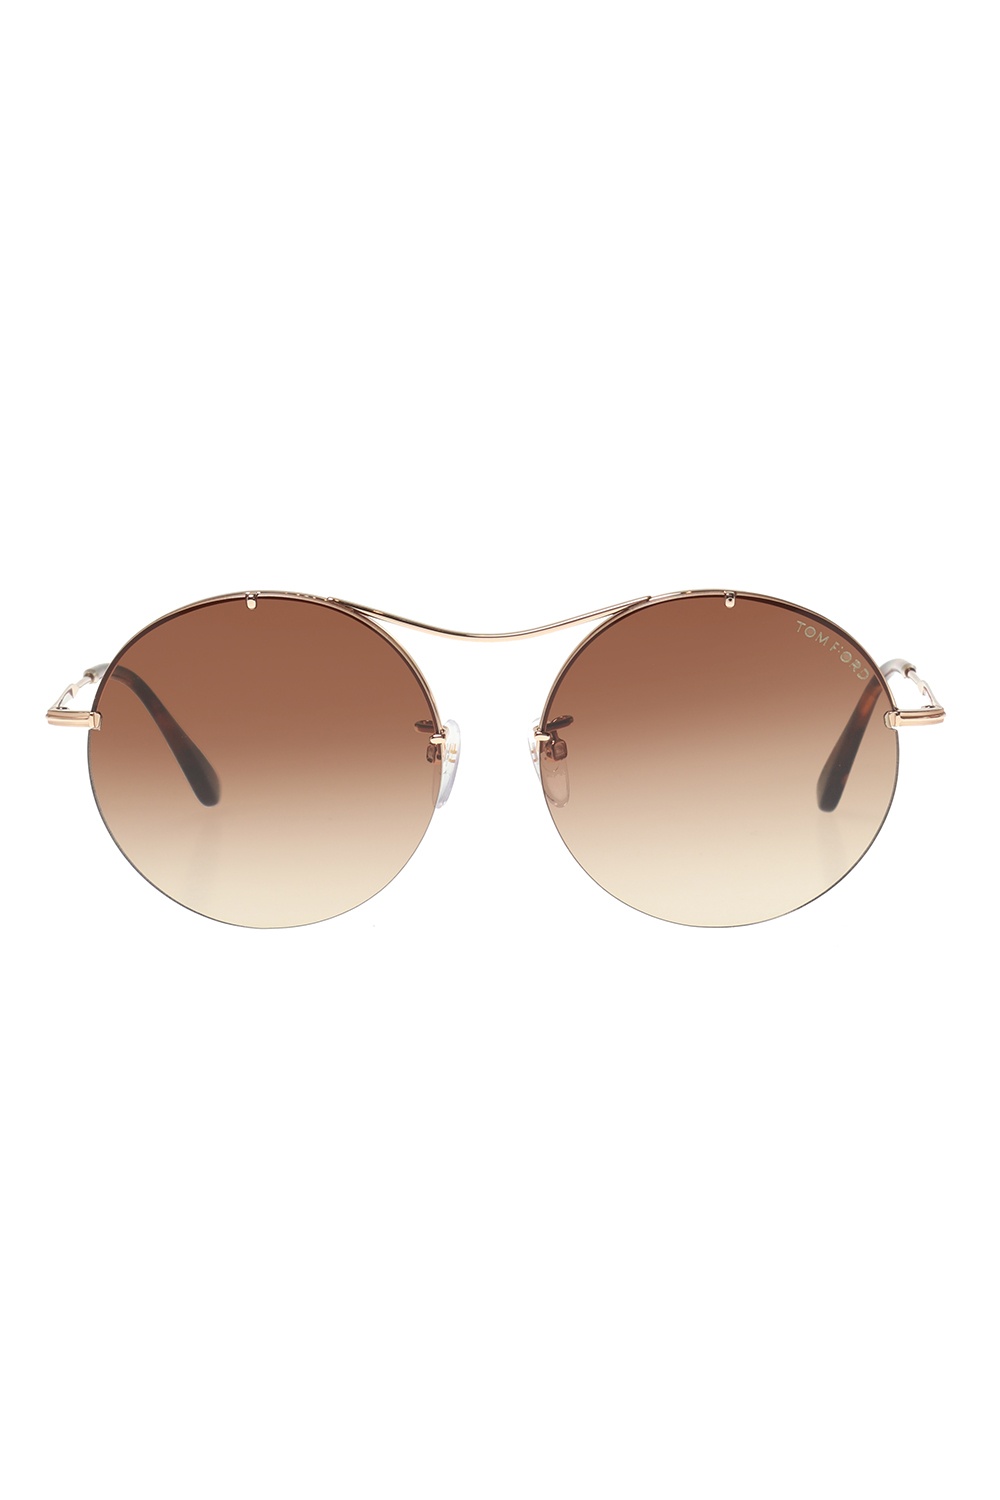 Tom Ford 'Georgina' sunglasses | Women's Accessories | Vitkac